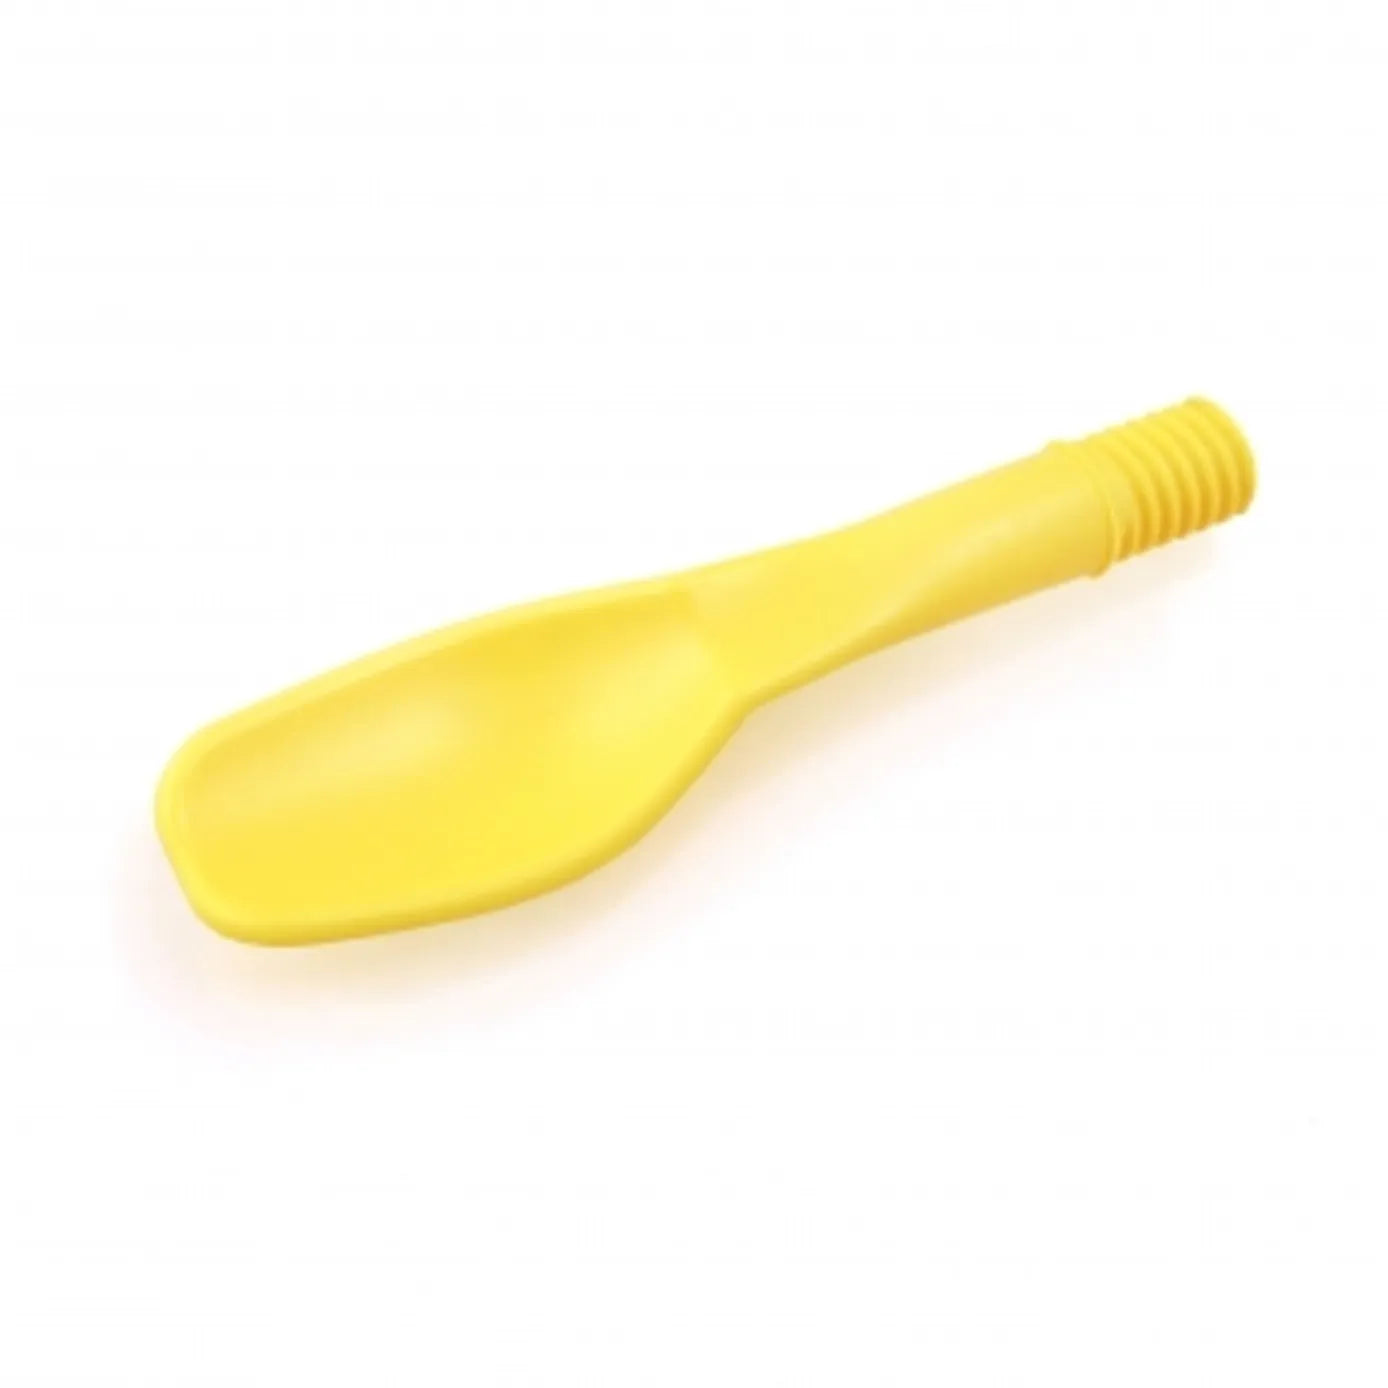 Feeding & Stimulation Spoon Tool